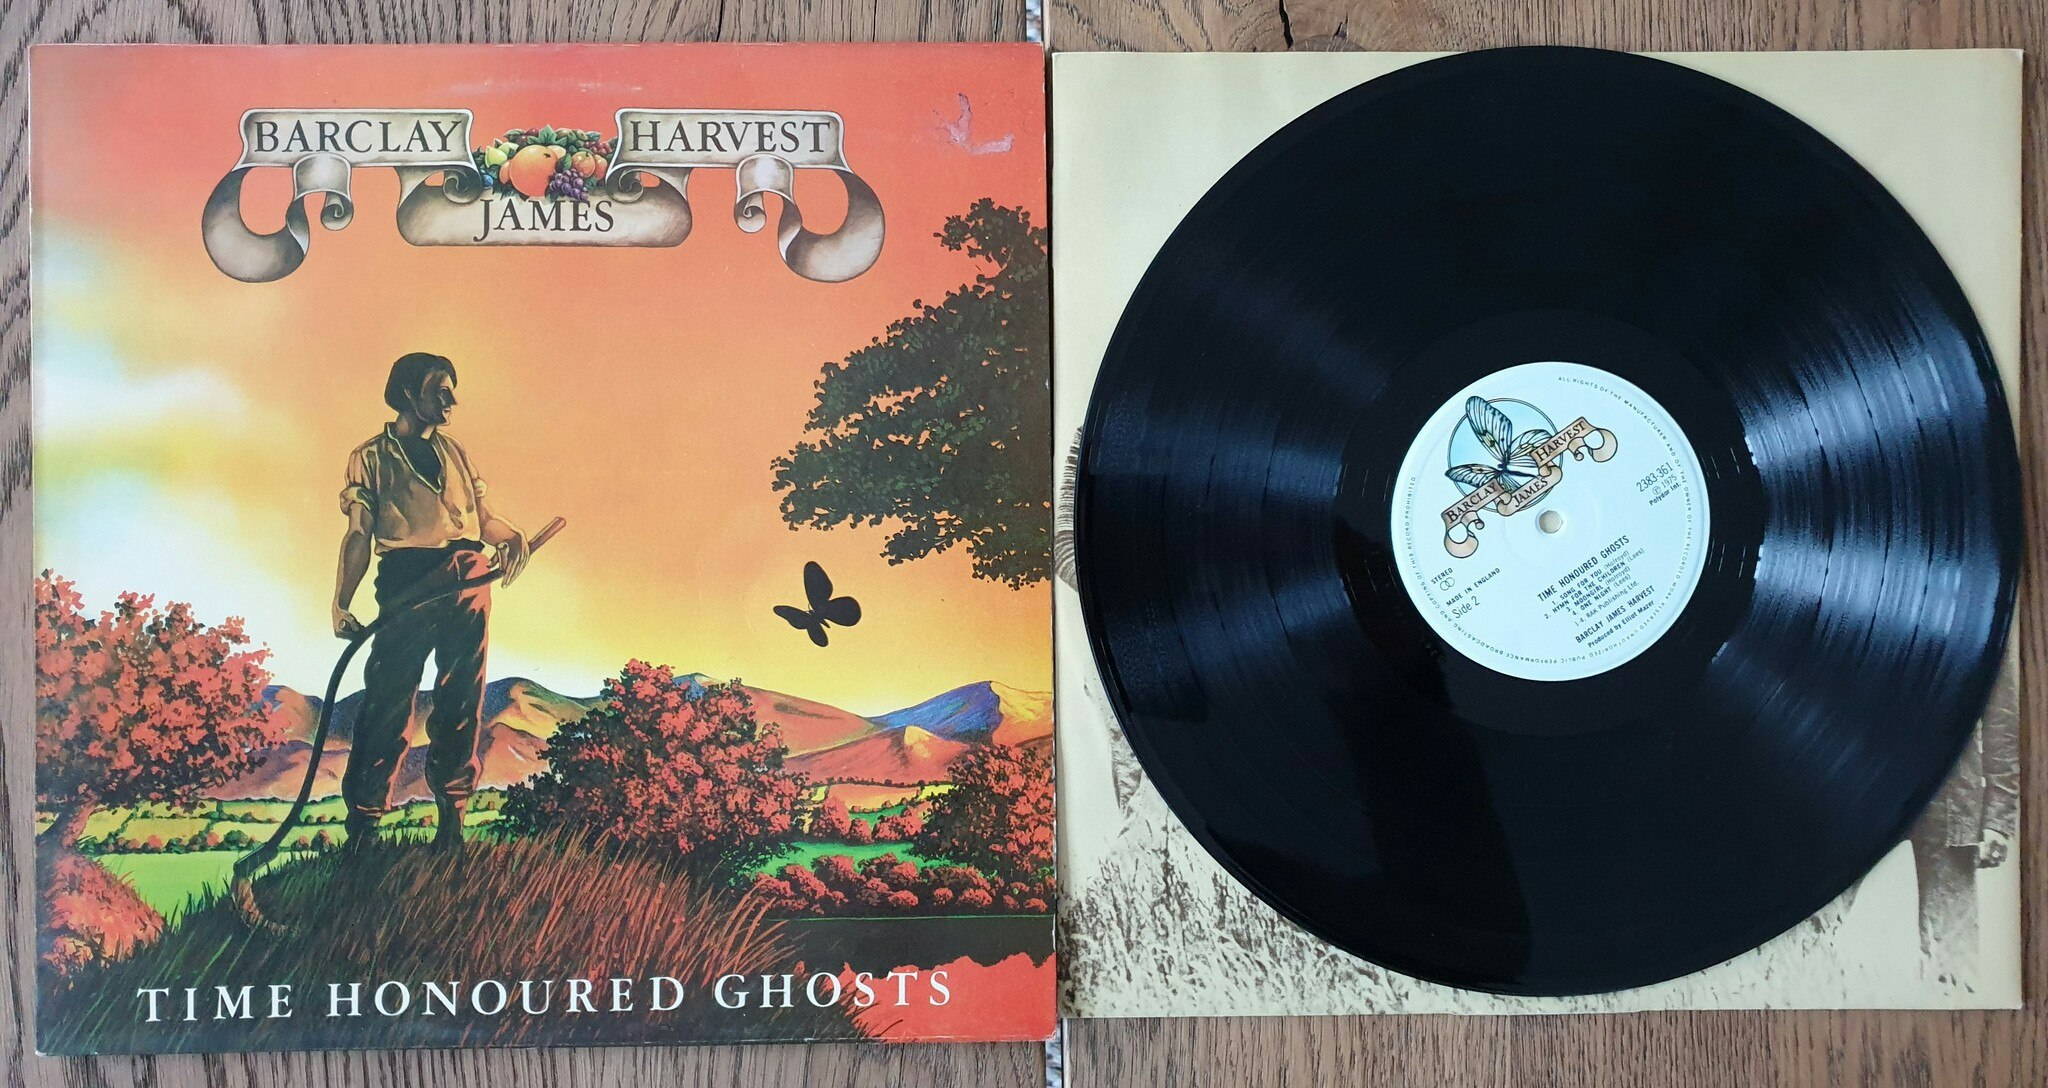 Barclay James Harvest, Time honoured ghosts. Vinyl LP